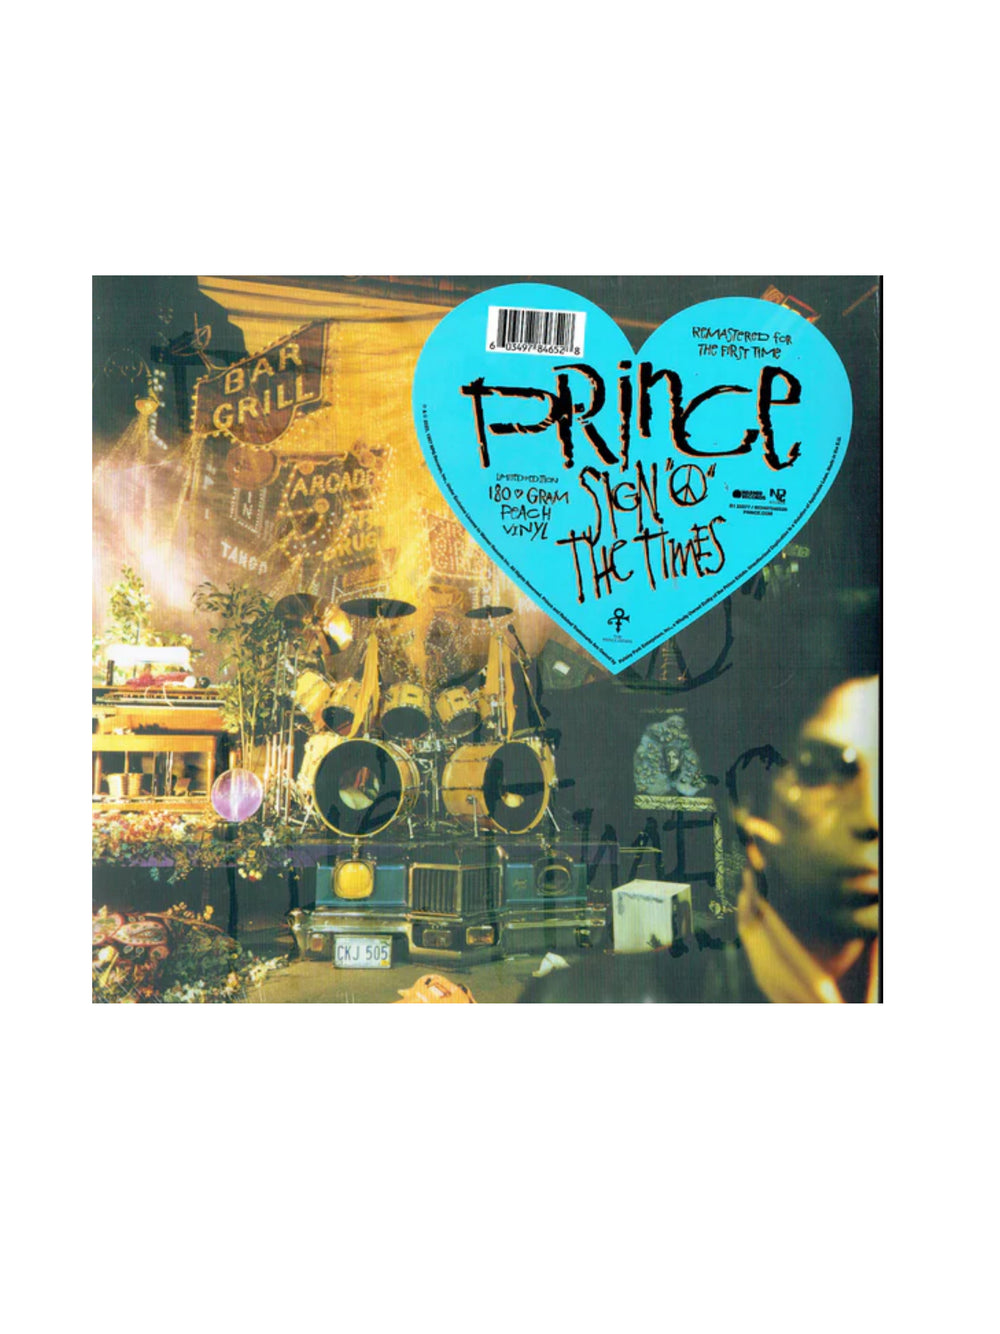 Prince – Sign O The Times Double Vinyl Album Reissue RM 2020 PEACH VINYL NEW